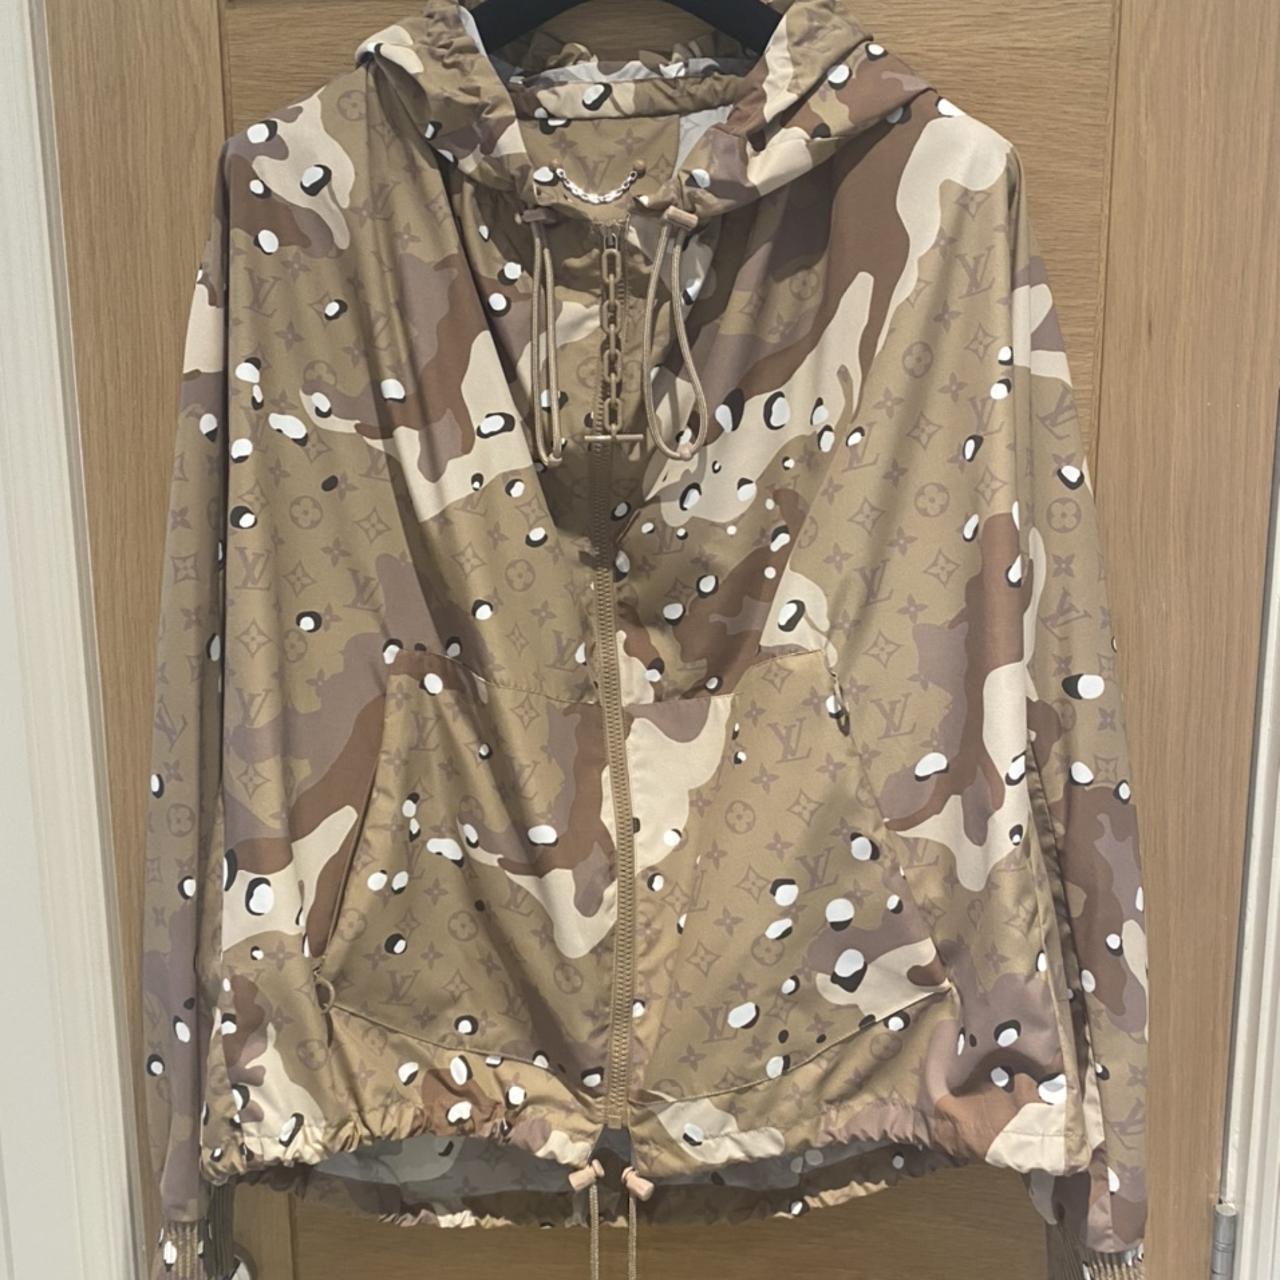 Supreme Louis Vuitton Monogram Camouflage Zipper Fleece Hoodie